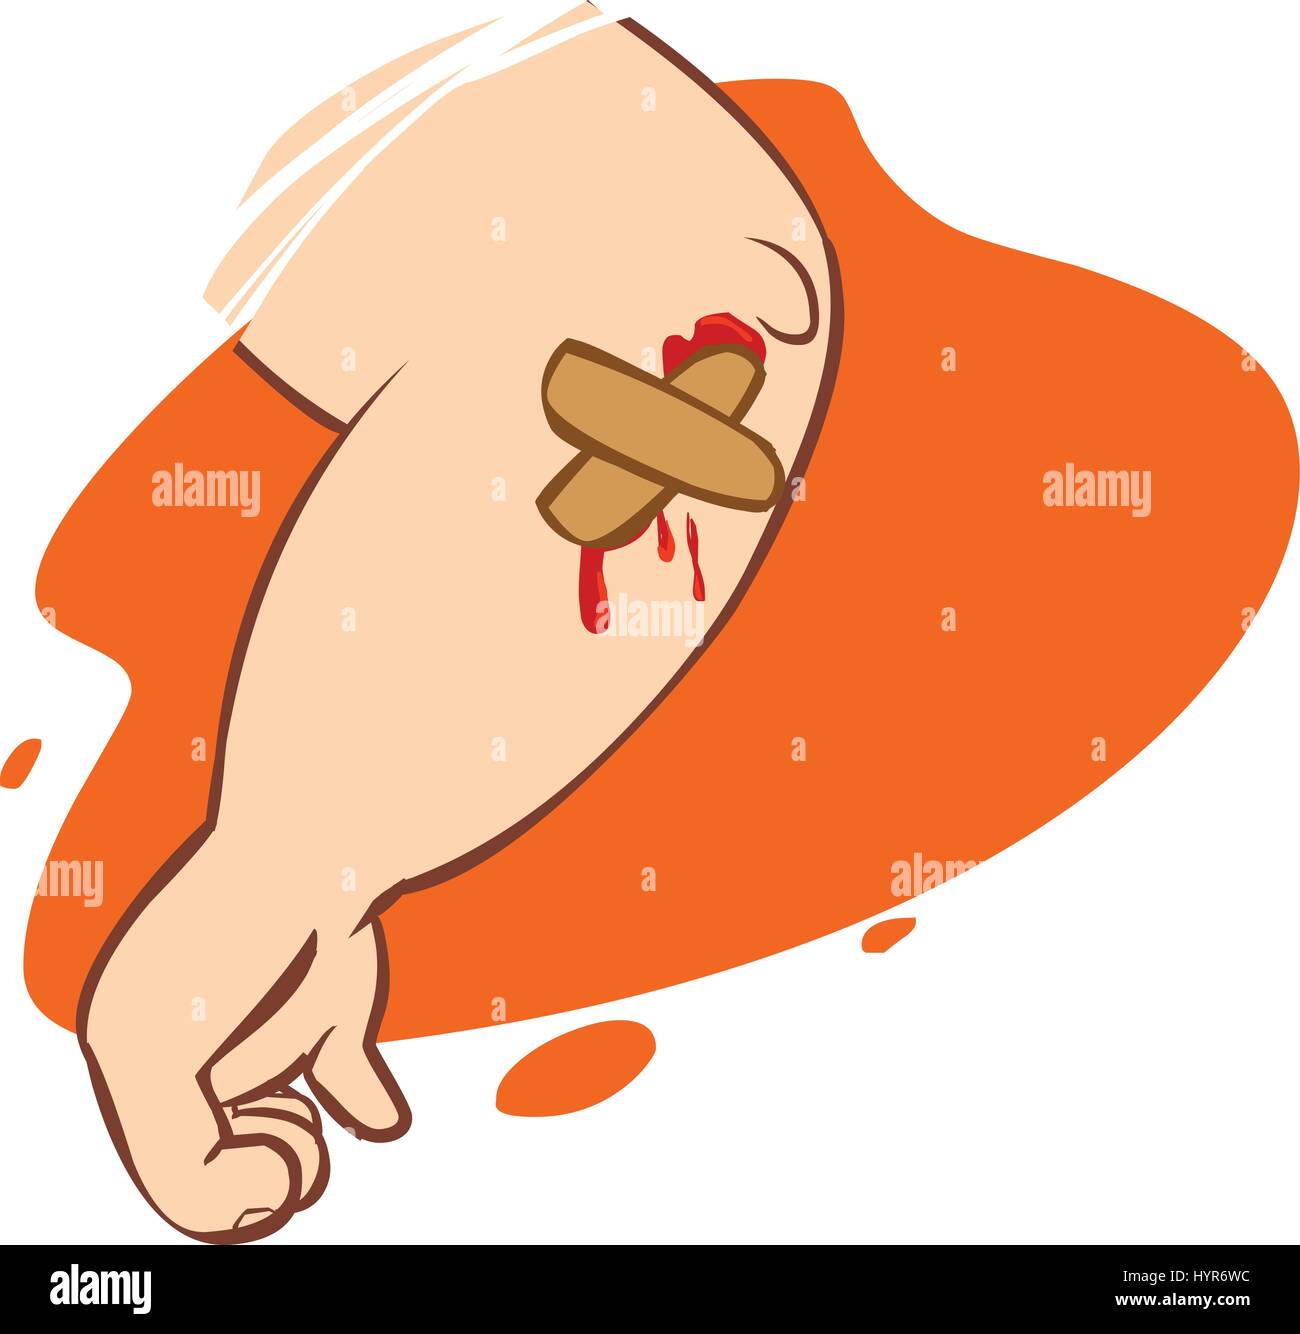 orangem Hintergrund-Vektor-Illustration einer Arm-Band Stock Vektor